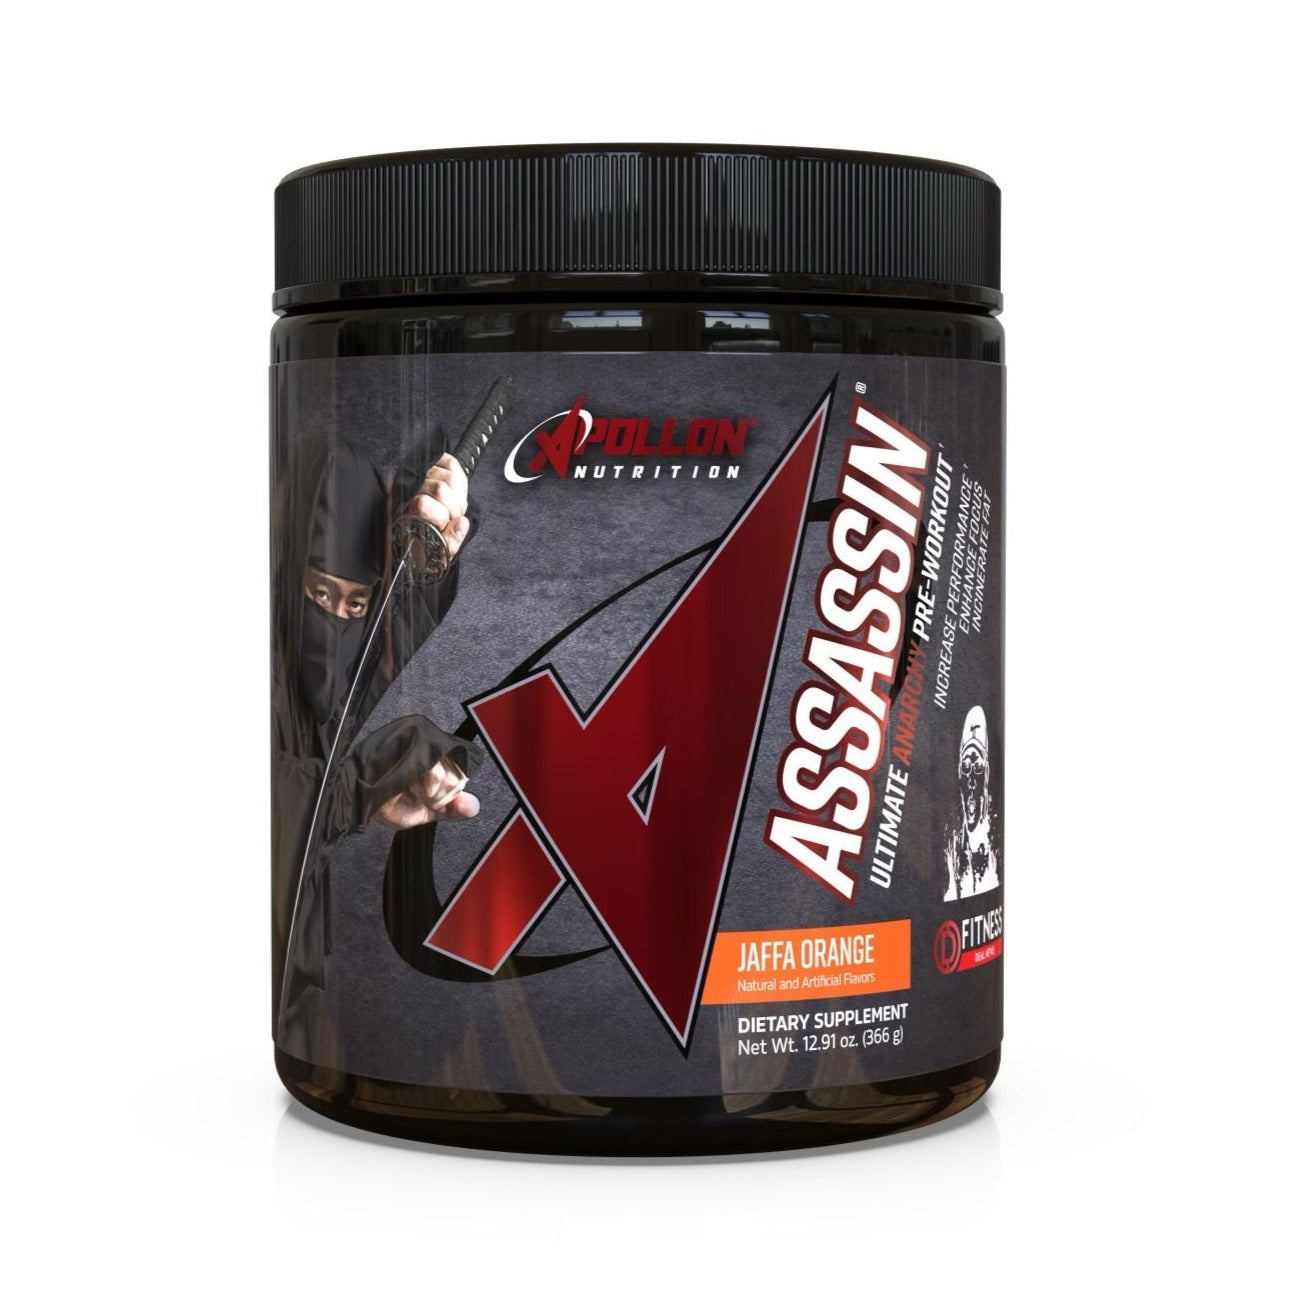 Assassin V6.5 Pre-Workout [FDN Edition]